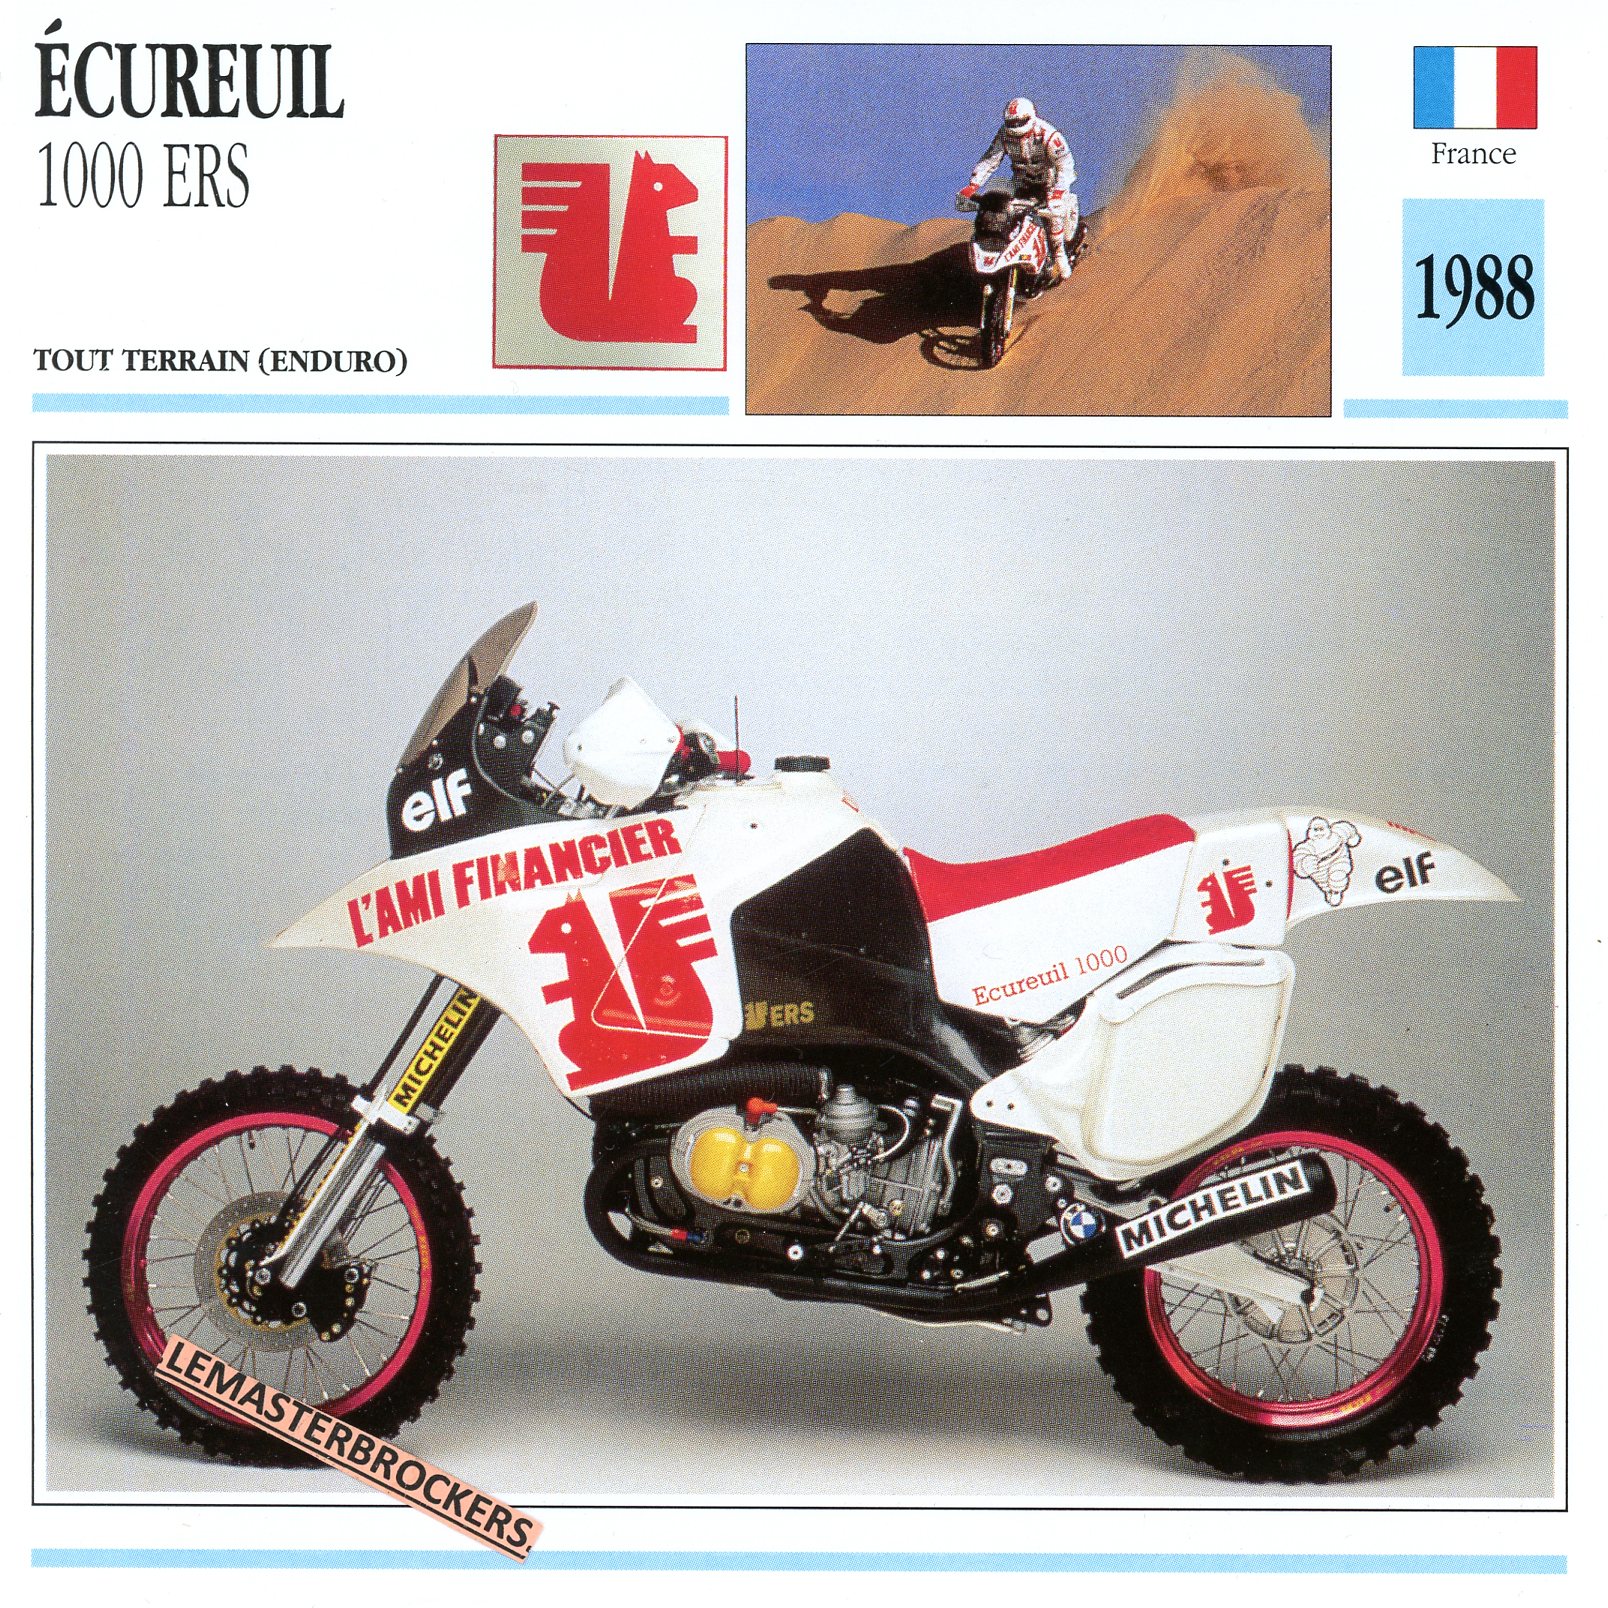 FICHE-MOTO-ECUREUIL-1000-ERS-1988-LEMASTERBROCKERS-CARD-MOTORCYCLE